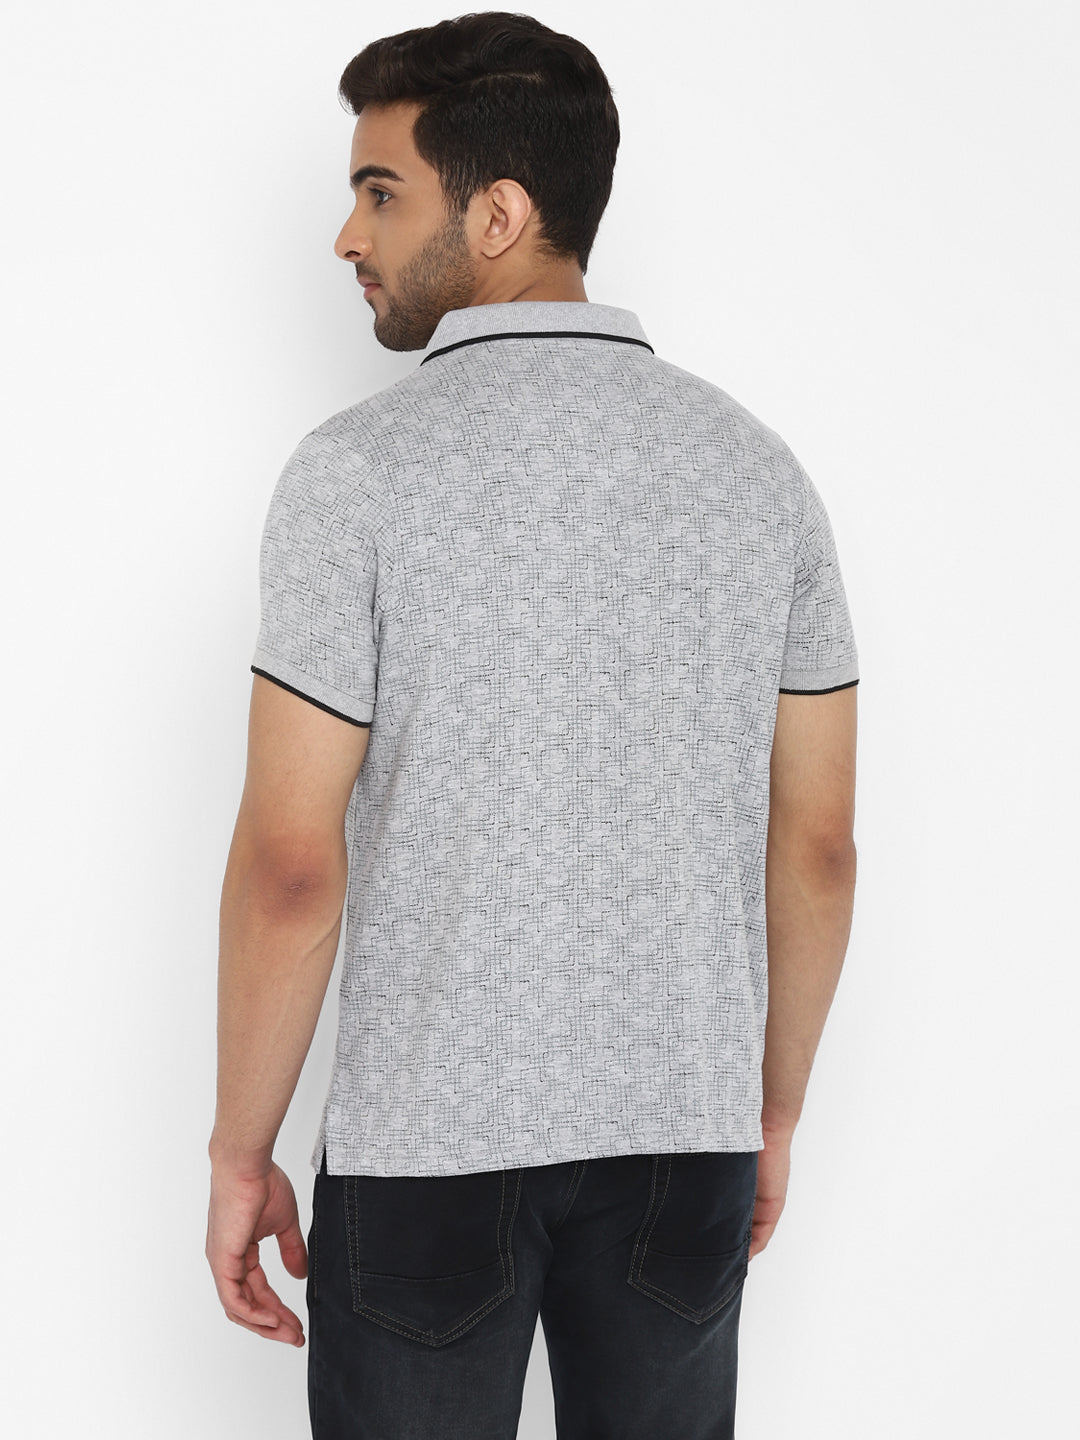 Grey Printed Polo Neck T-Shirt